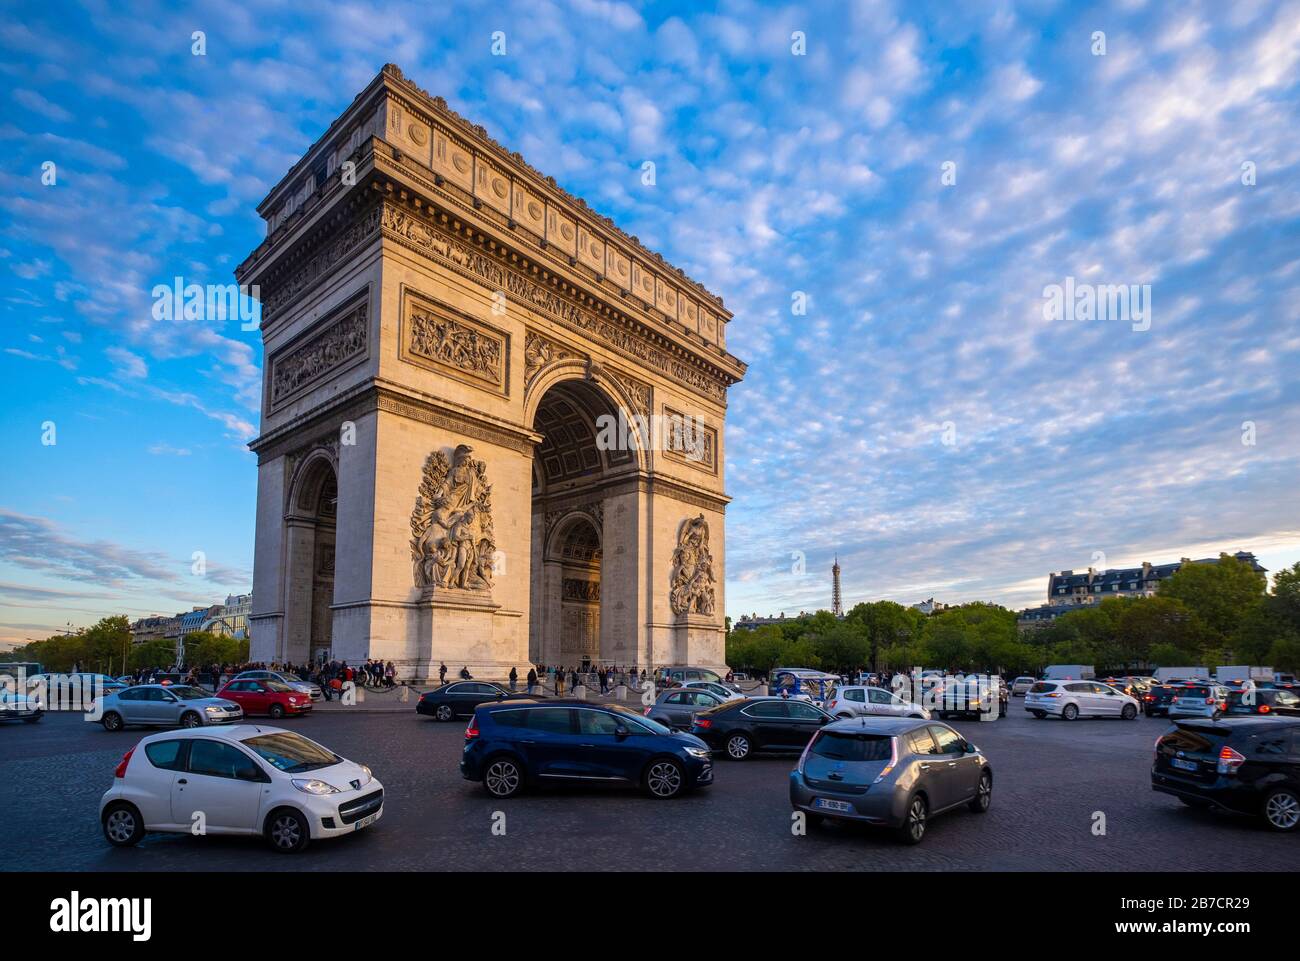 L'Arc de Triomphe in the center of the Place Charles de Gaulle, Paris, France, Europe Stock Photo